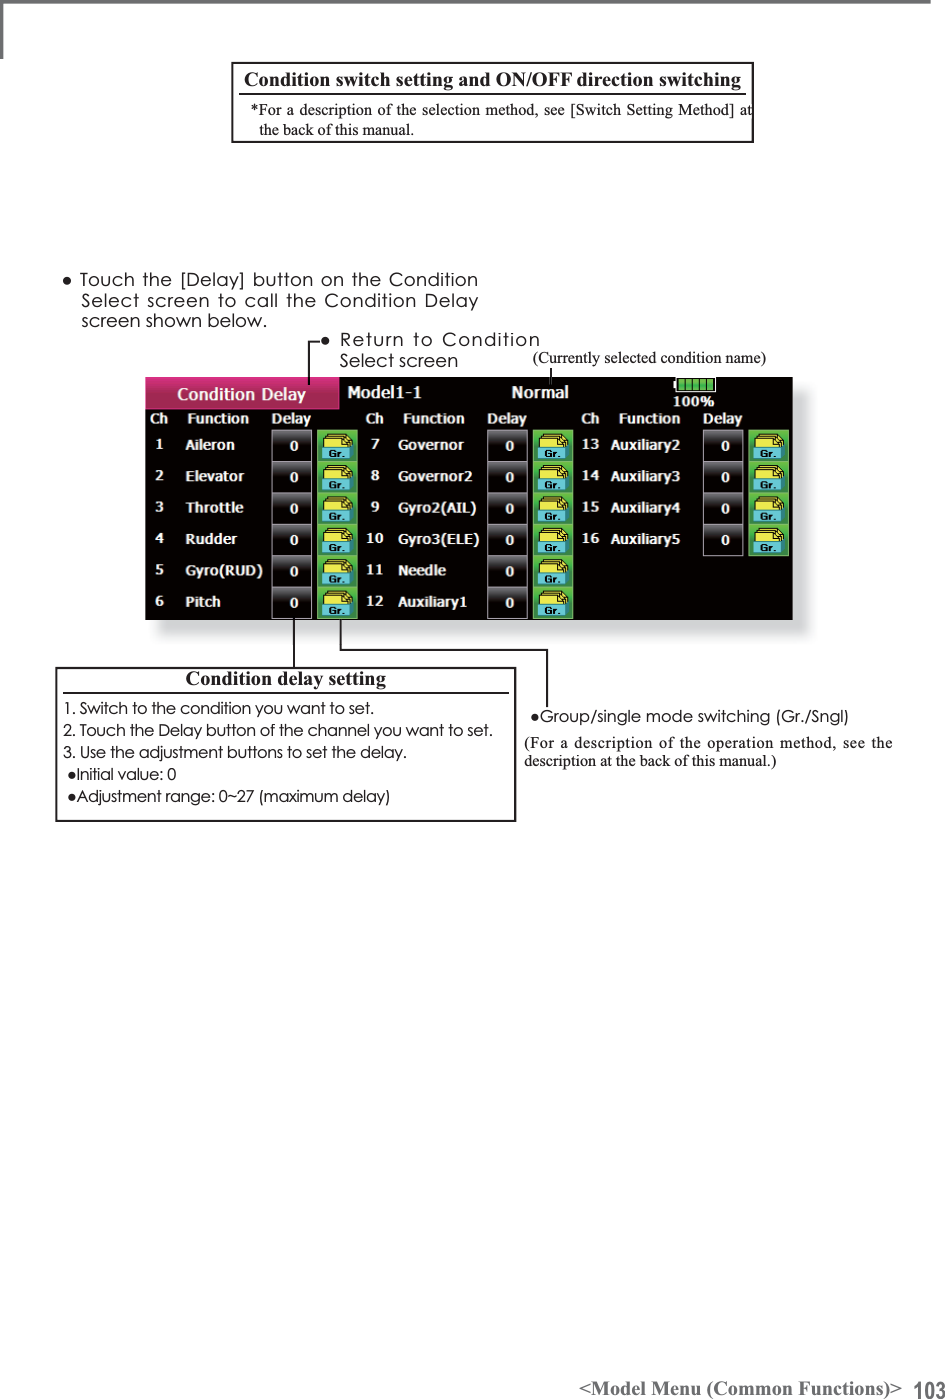 103&lt;Model Menu (Common Functions)&gt;ŏ5HWXUQWR&amp;RQGLWLRQ6HOHFWVFUHHQŏ7RXFKWKH&gt;&apos;HOD\@EXWWRQRQWKH&amp;RQGLWLRQ6HOHFWVFUHHQWRFDOOWKH&amp;RQGLWLRQ&apos;HOD\screen shown below.(Currently selected condition name)&amp;RQGLWLRQGHOD\VHWWLQJ6ZLWFKWRWKHFRQGLWLRQ\RXZDQWWRVHW7RXFKWKH&apos;HOD\EXWWRQRIWKHFKDQQHO\RXZDQWWRVHW3. Use the adjustment buttons to set the delay.ŏ,QLWLDOYDOXHŏ$GMXVWPHQWUDQJHaPD[LPXPGHOD\ŏ*URXSVLQJOHPRGHVZLWFKLQJ*U6QJO(For a description of the operation method, see thedescription at the back of this manual.)&amp;RQGLWLRQVZLWFKVHWWLQJDQG212))GLUHFWLRQVZLWFKLQJ*For a description of the selection method, see [Switch Setting Method] atthe back of this manual.t 